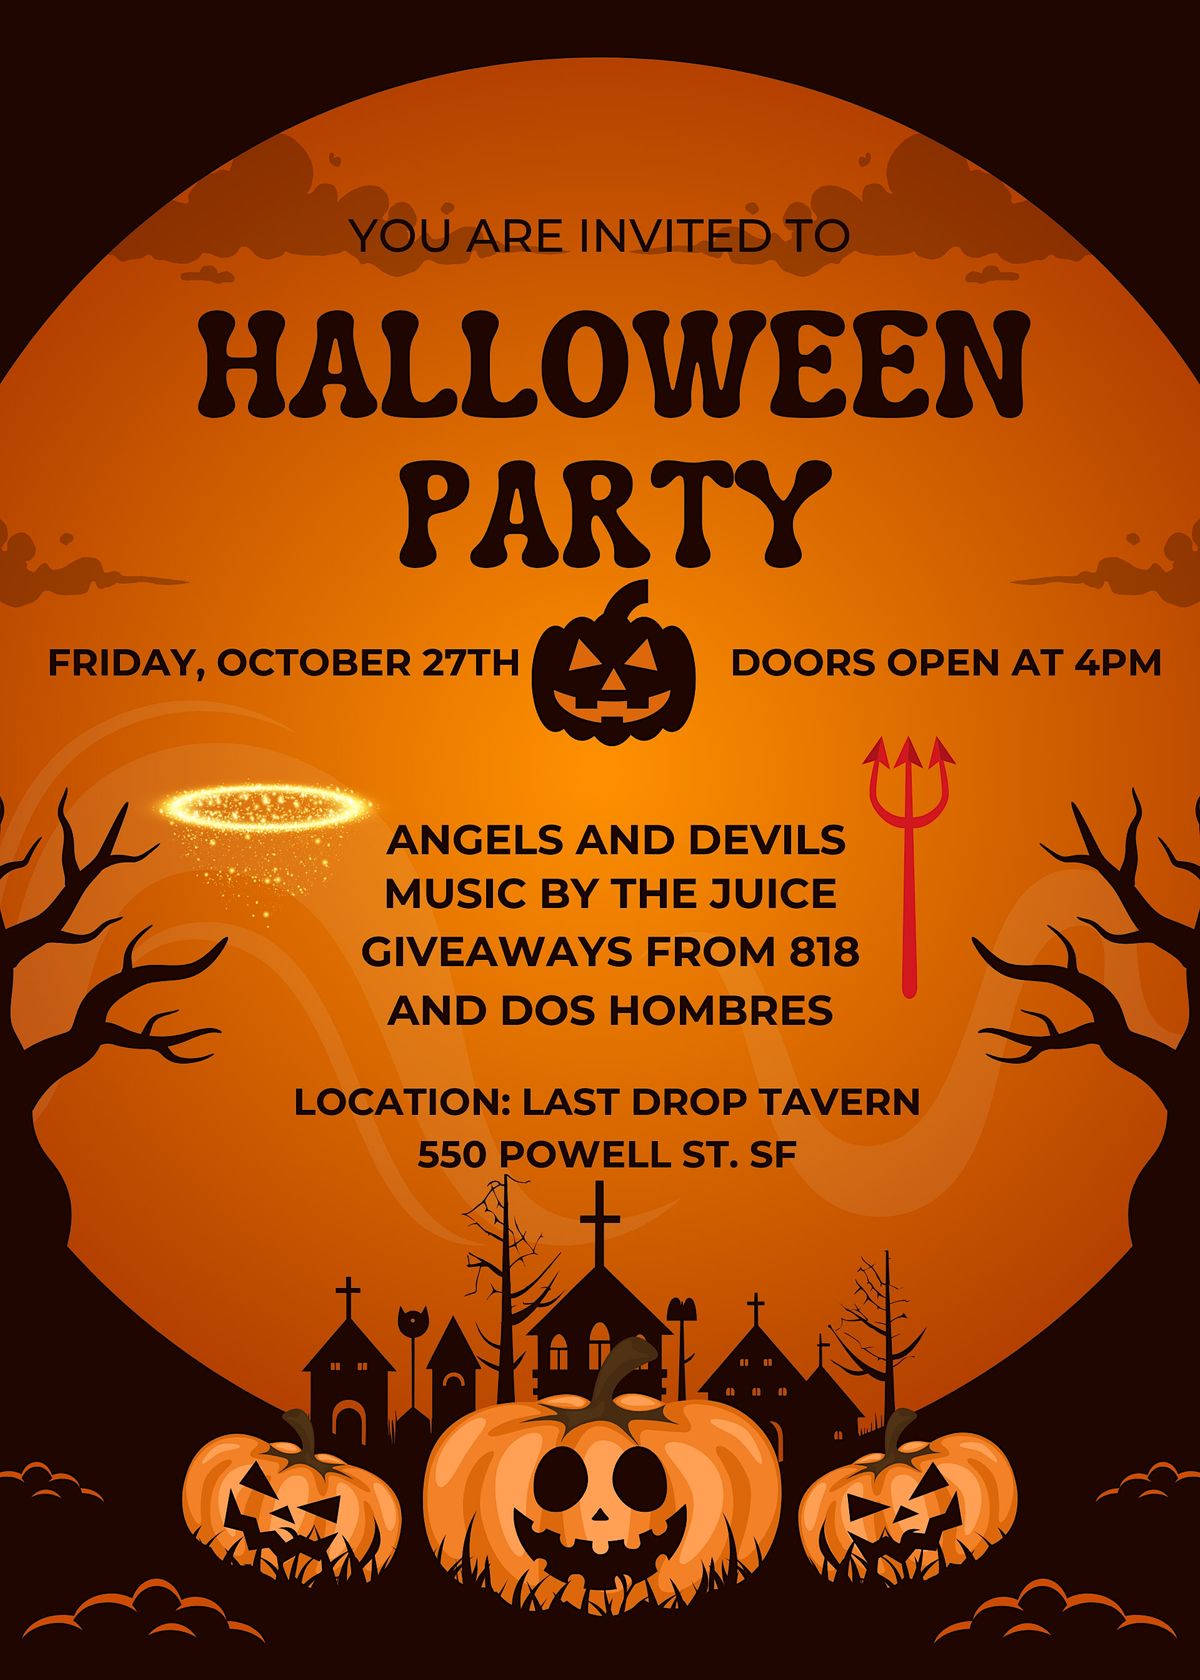 Last Drop Tavern Halloween Party